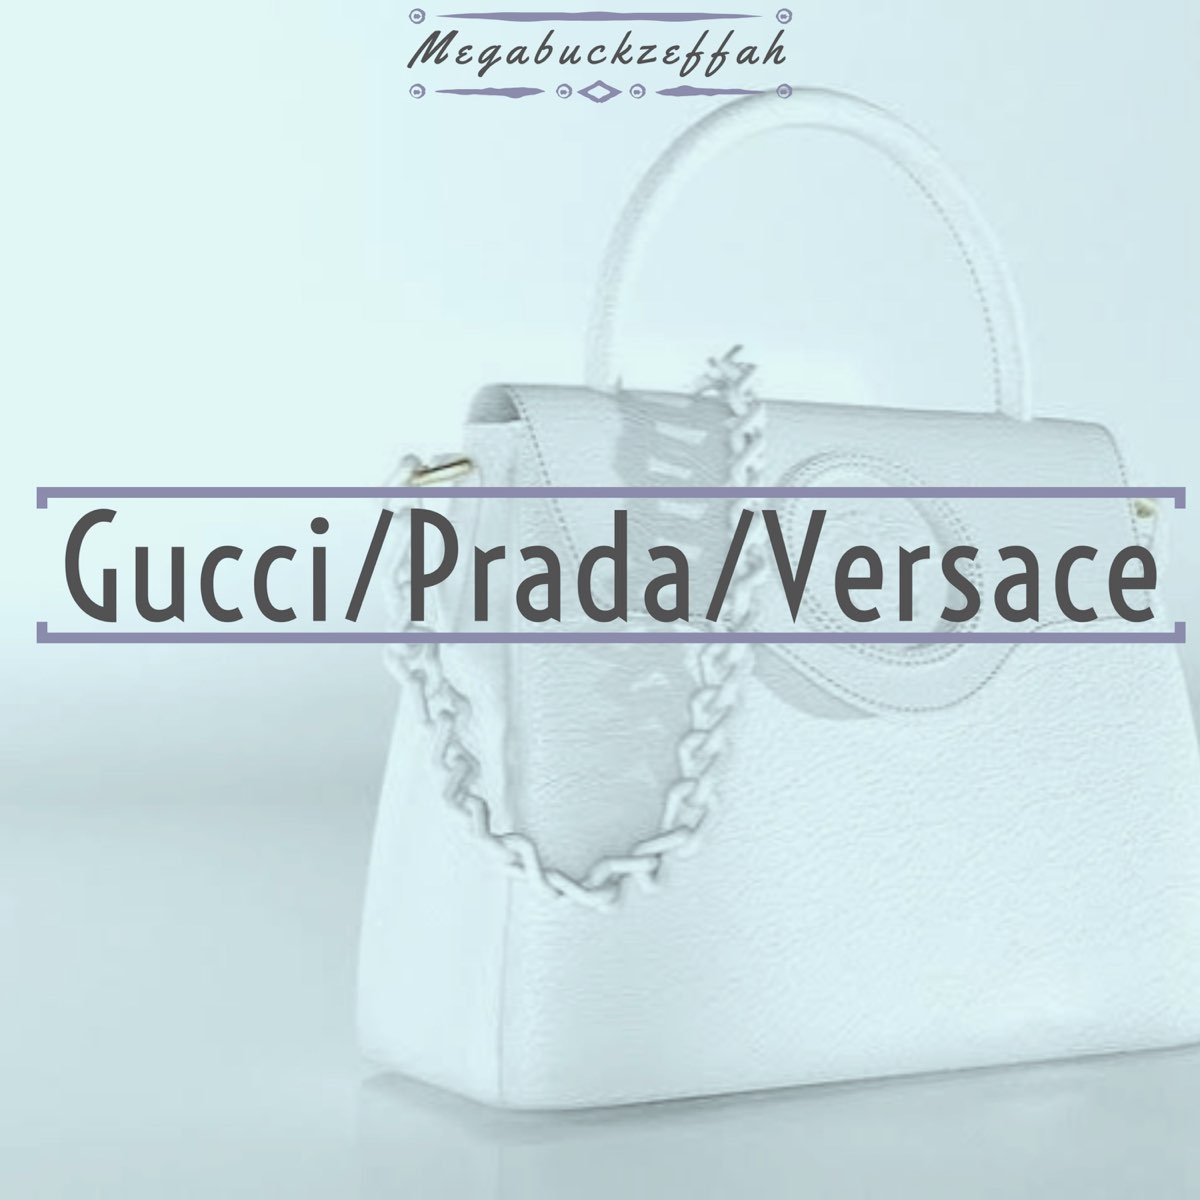 Gucci Prada Versace - Single - Album by megabuckzeffah - Apple Music